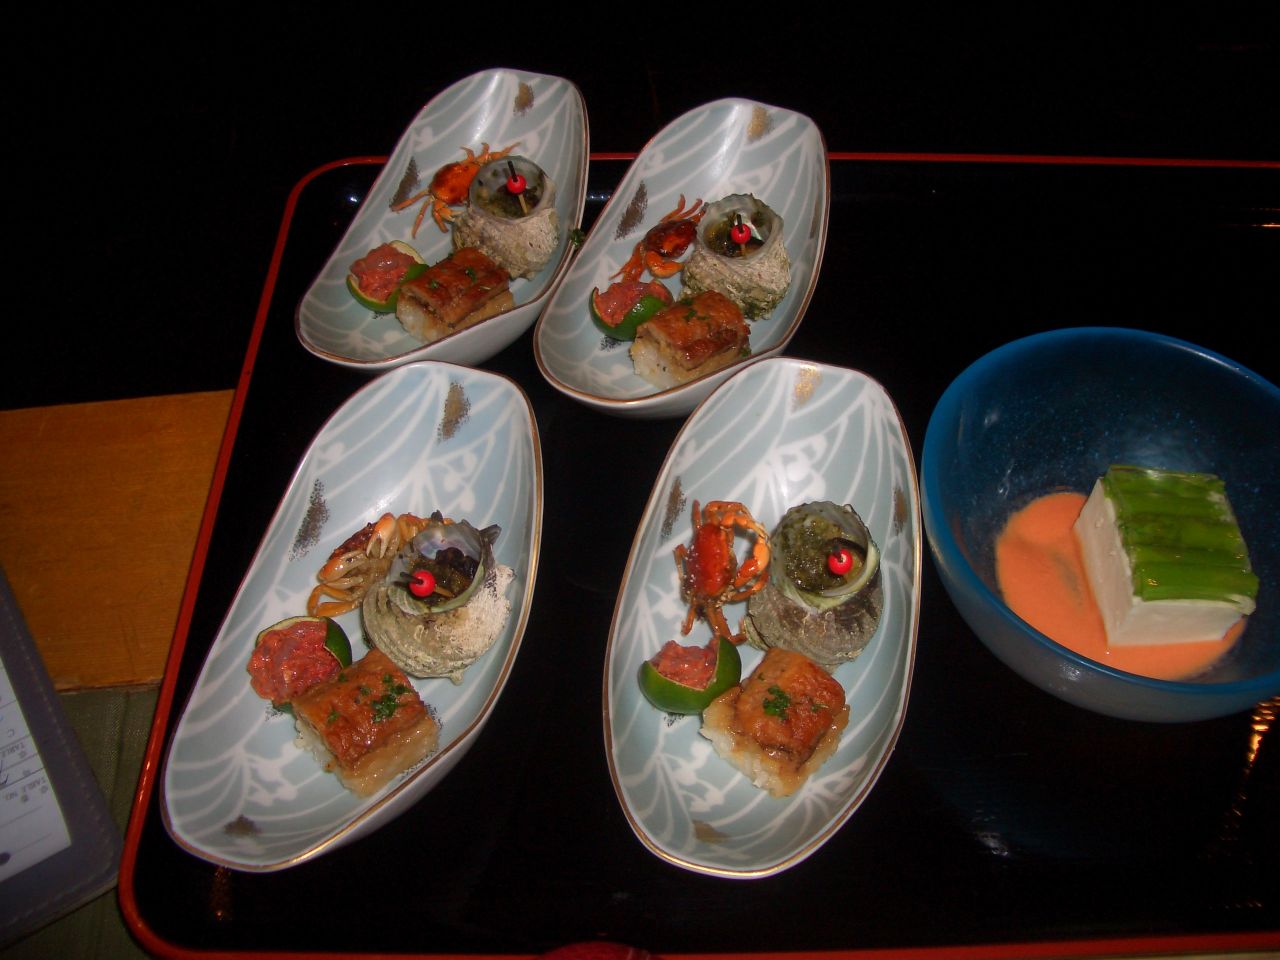 Enticing dishes at Sakana Takewaka.